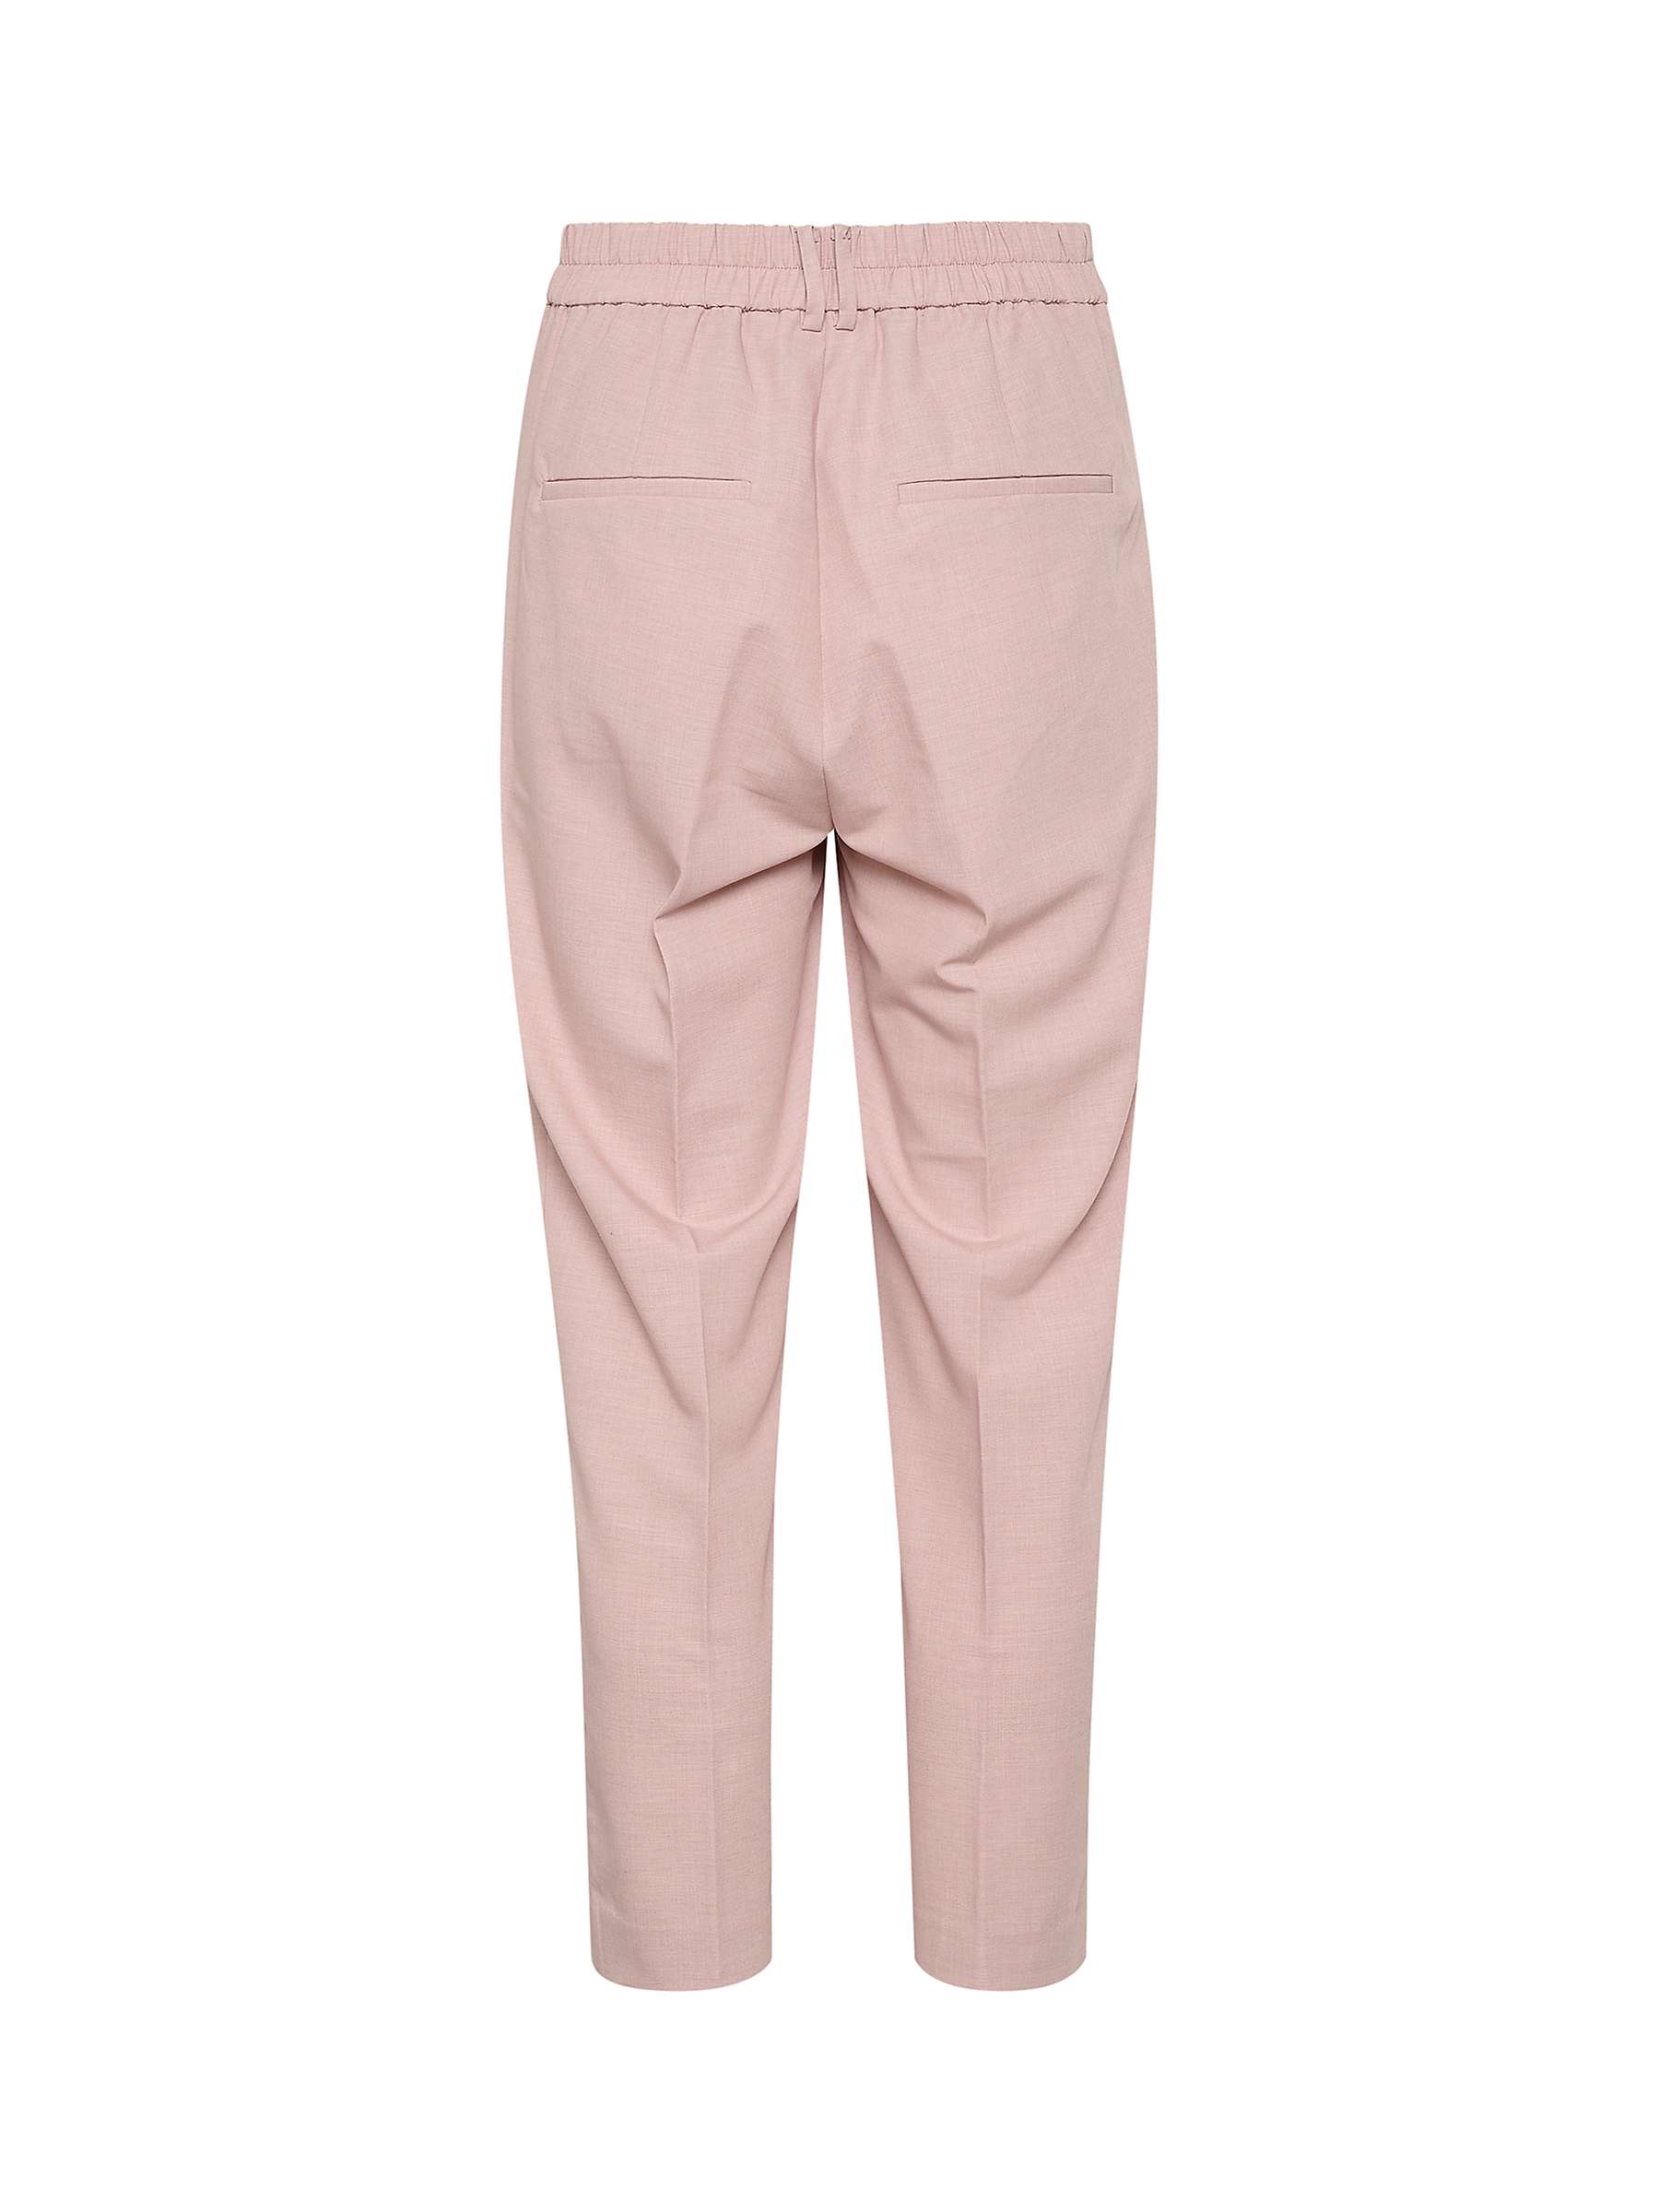 Buy InWear Naxa Regular Fit Trousers, Dusty Blush Online at johnlewis.com